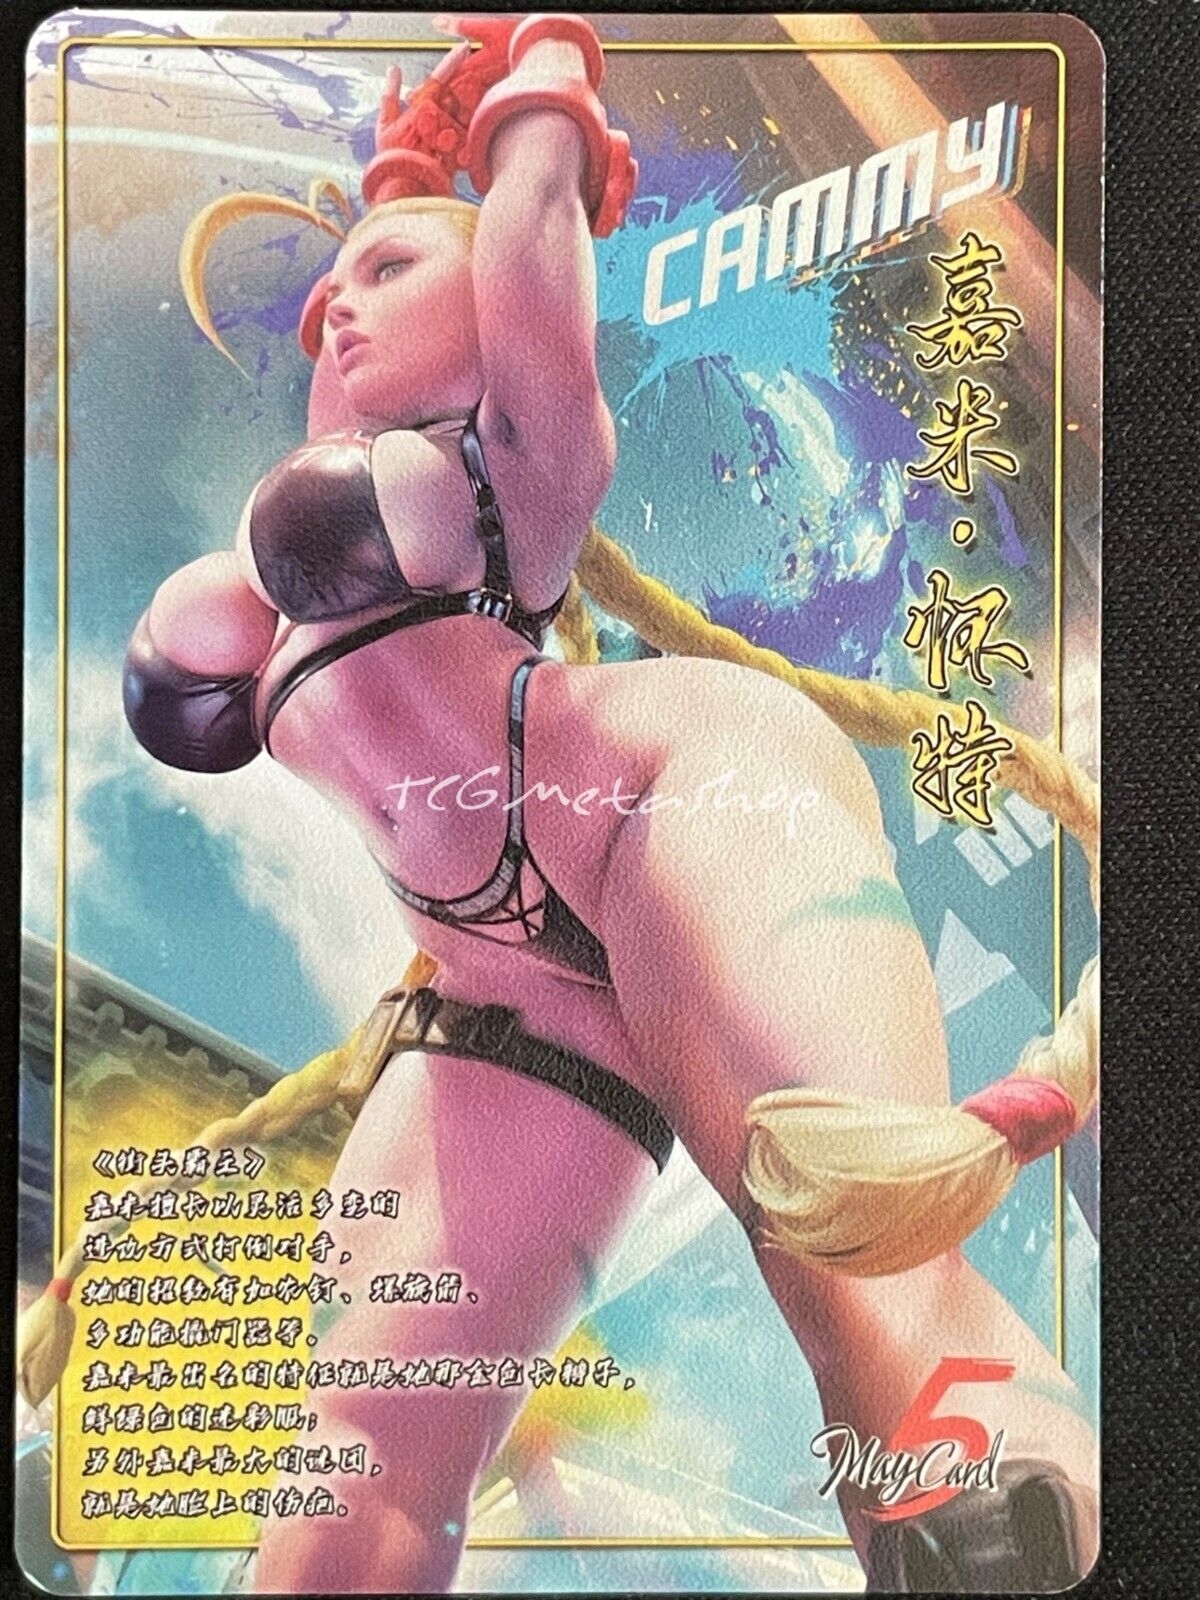 🔥 Cammy Street Fighter Goddess Story Anime Card ACG # 2637 🔥